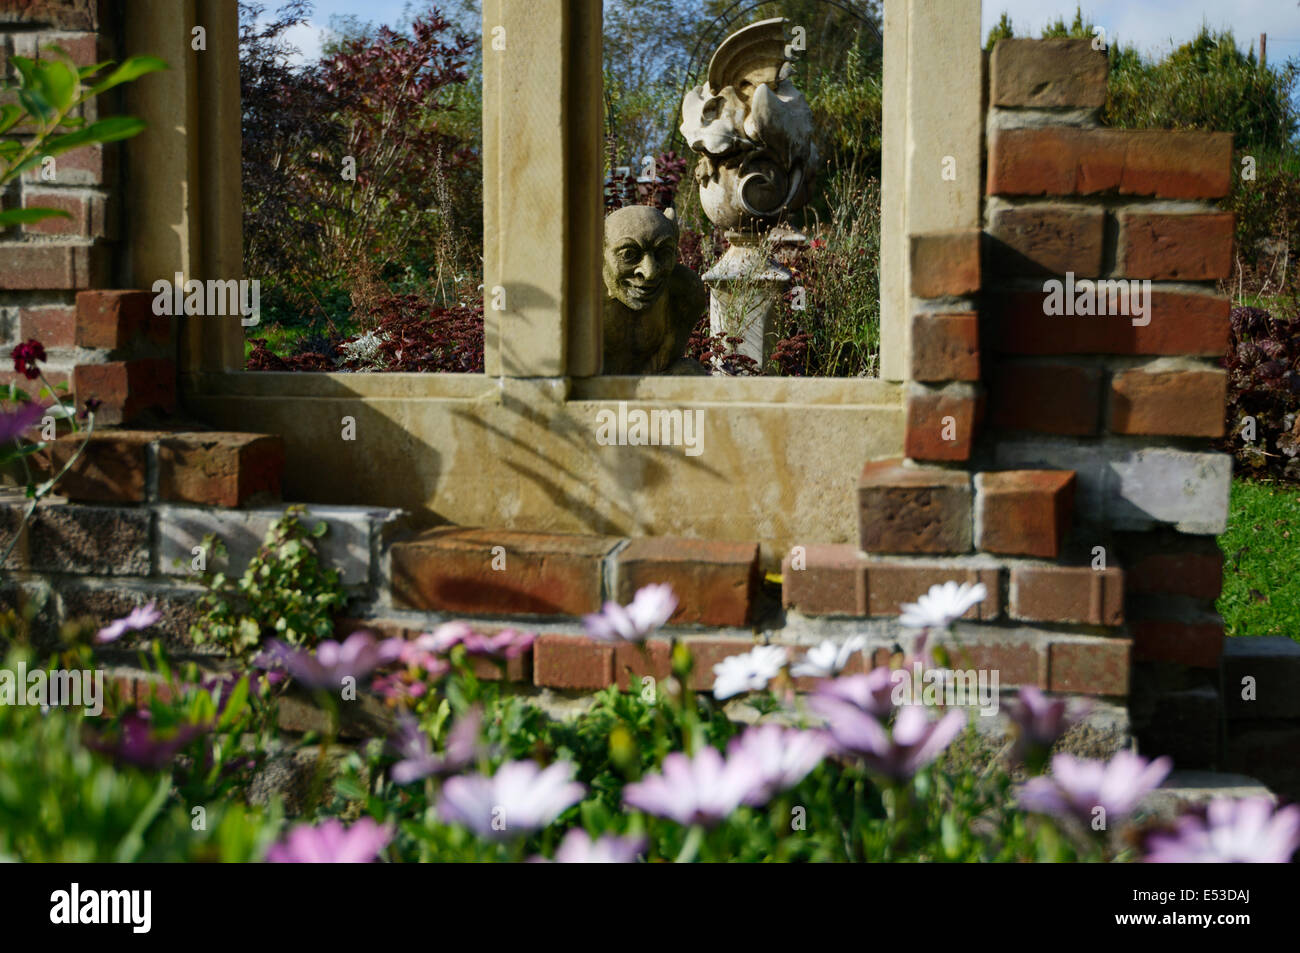 The Gothic Garden at Sculptureheaven sculpture garden, Rhydlewis, Llandysul, Wales, UK. Stock Photo